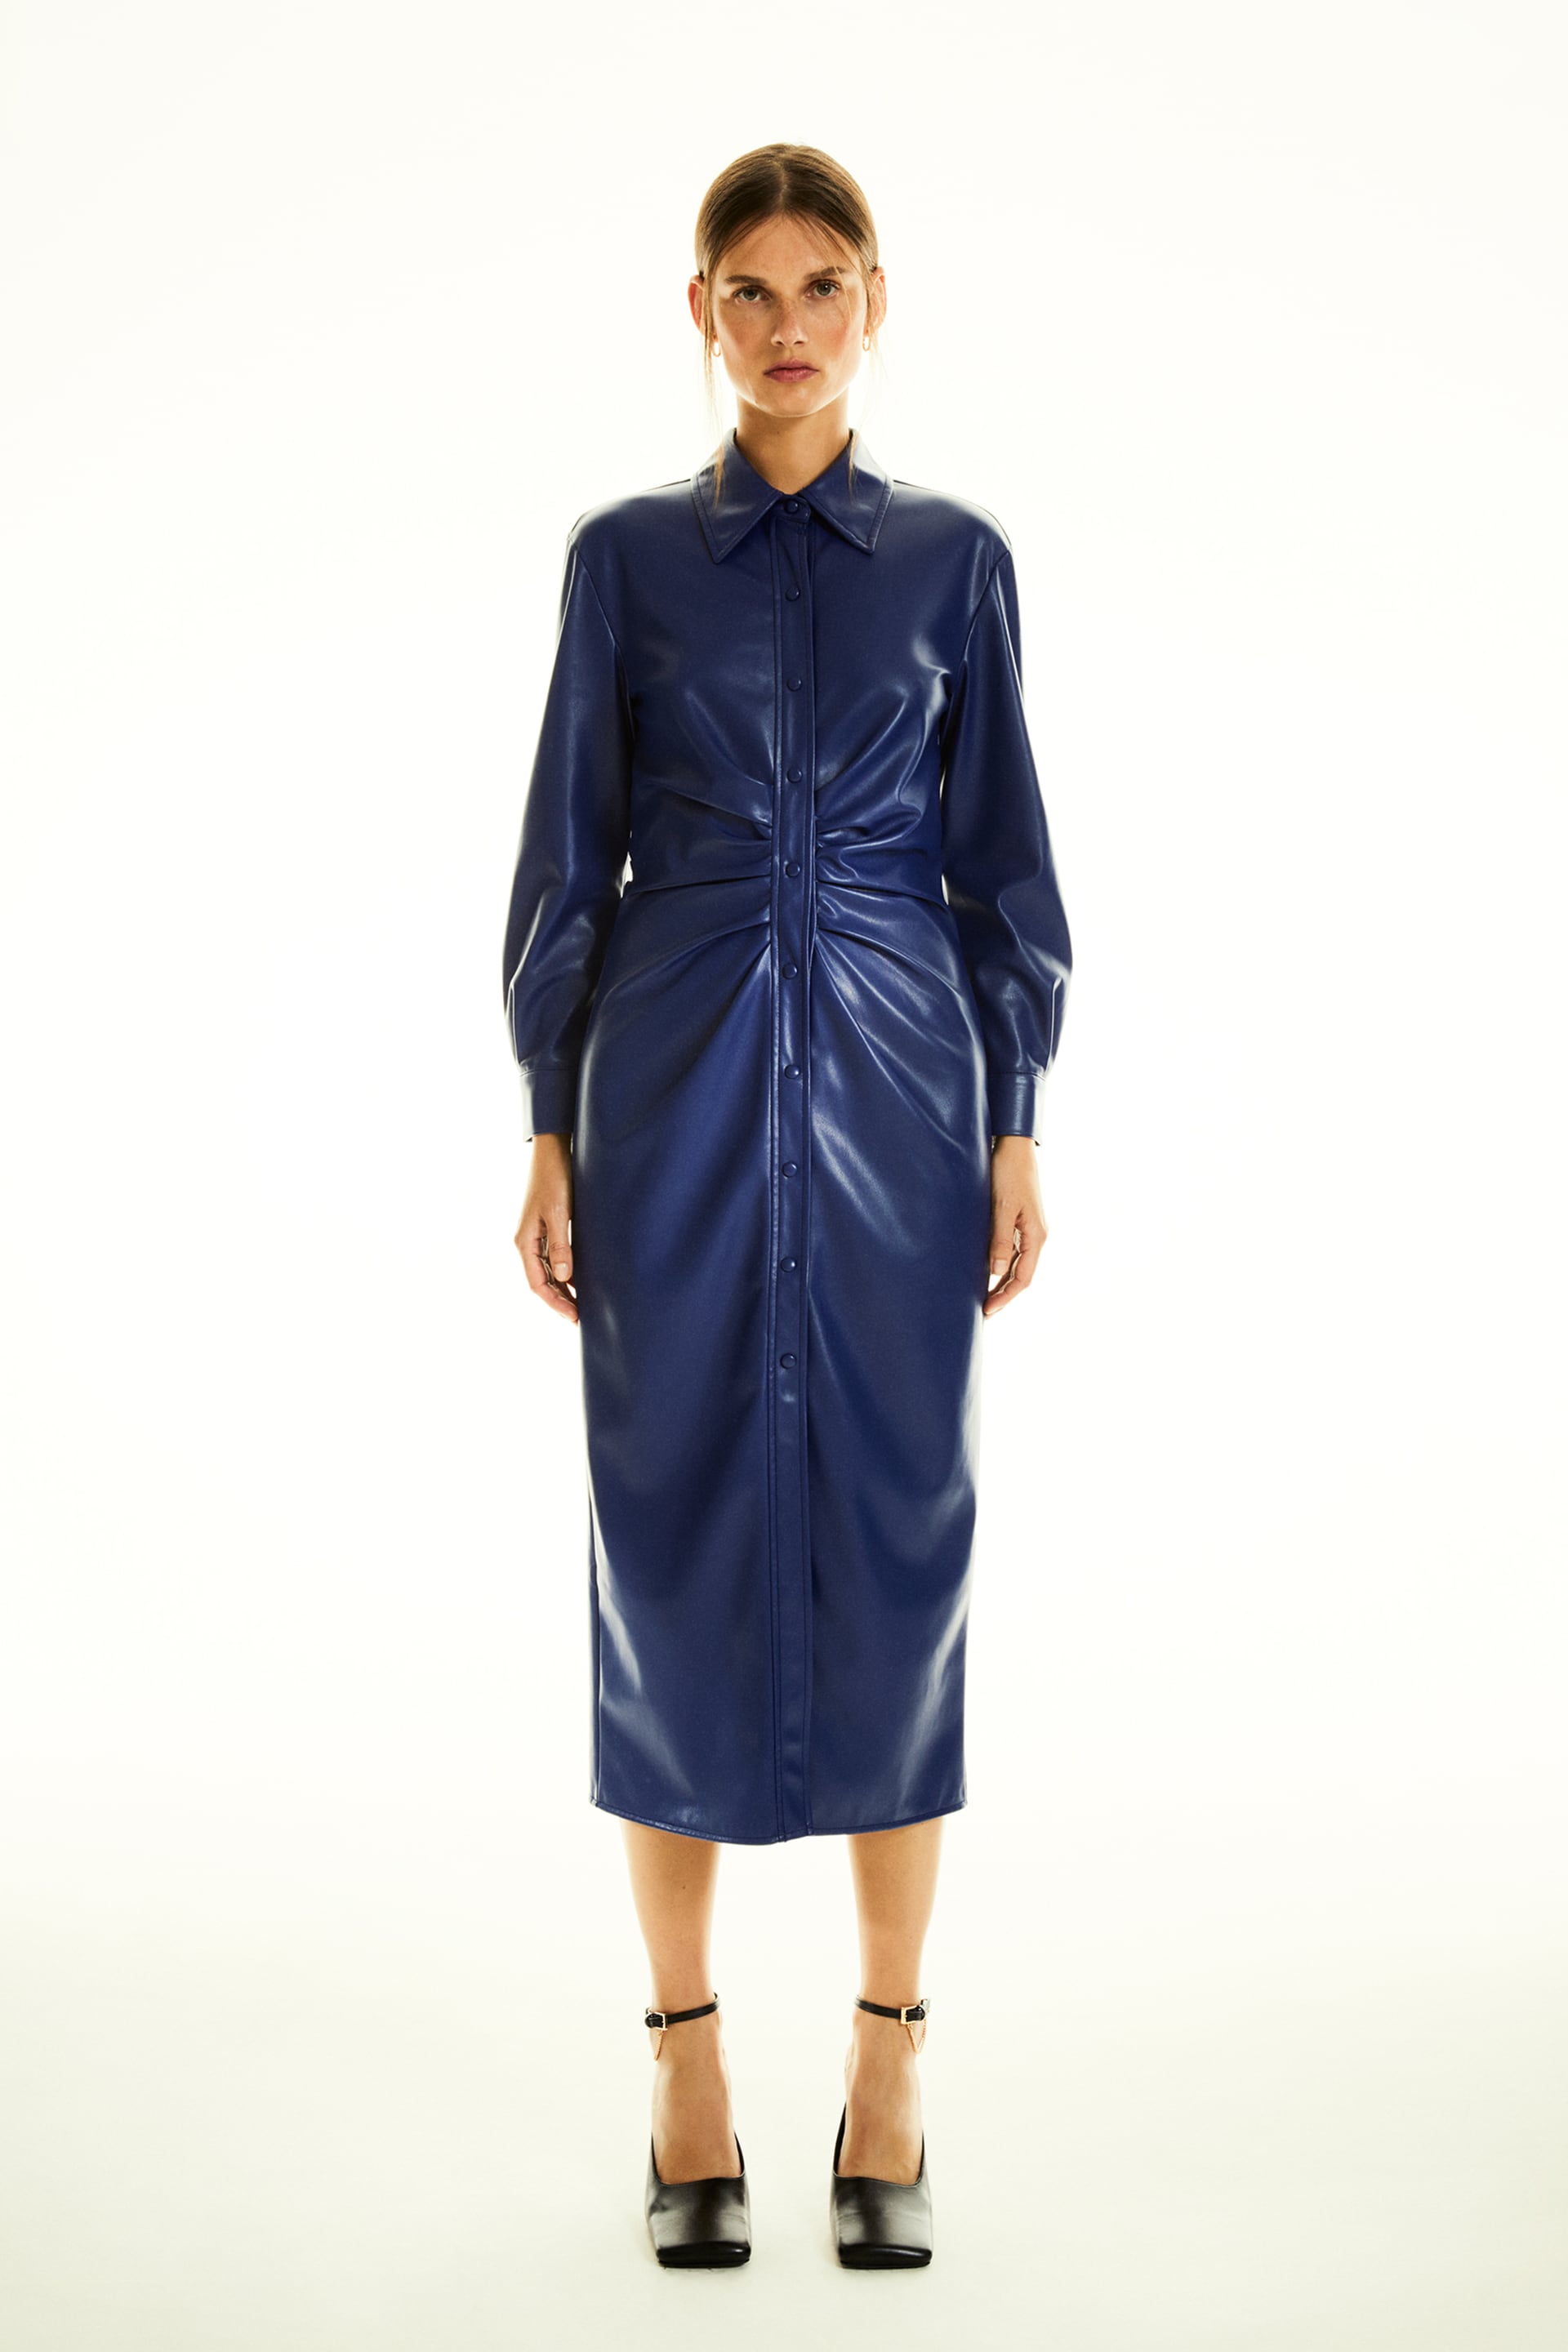 Zara FAUX LEATHER SHIRT DRESS - 81634285-400-